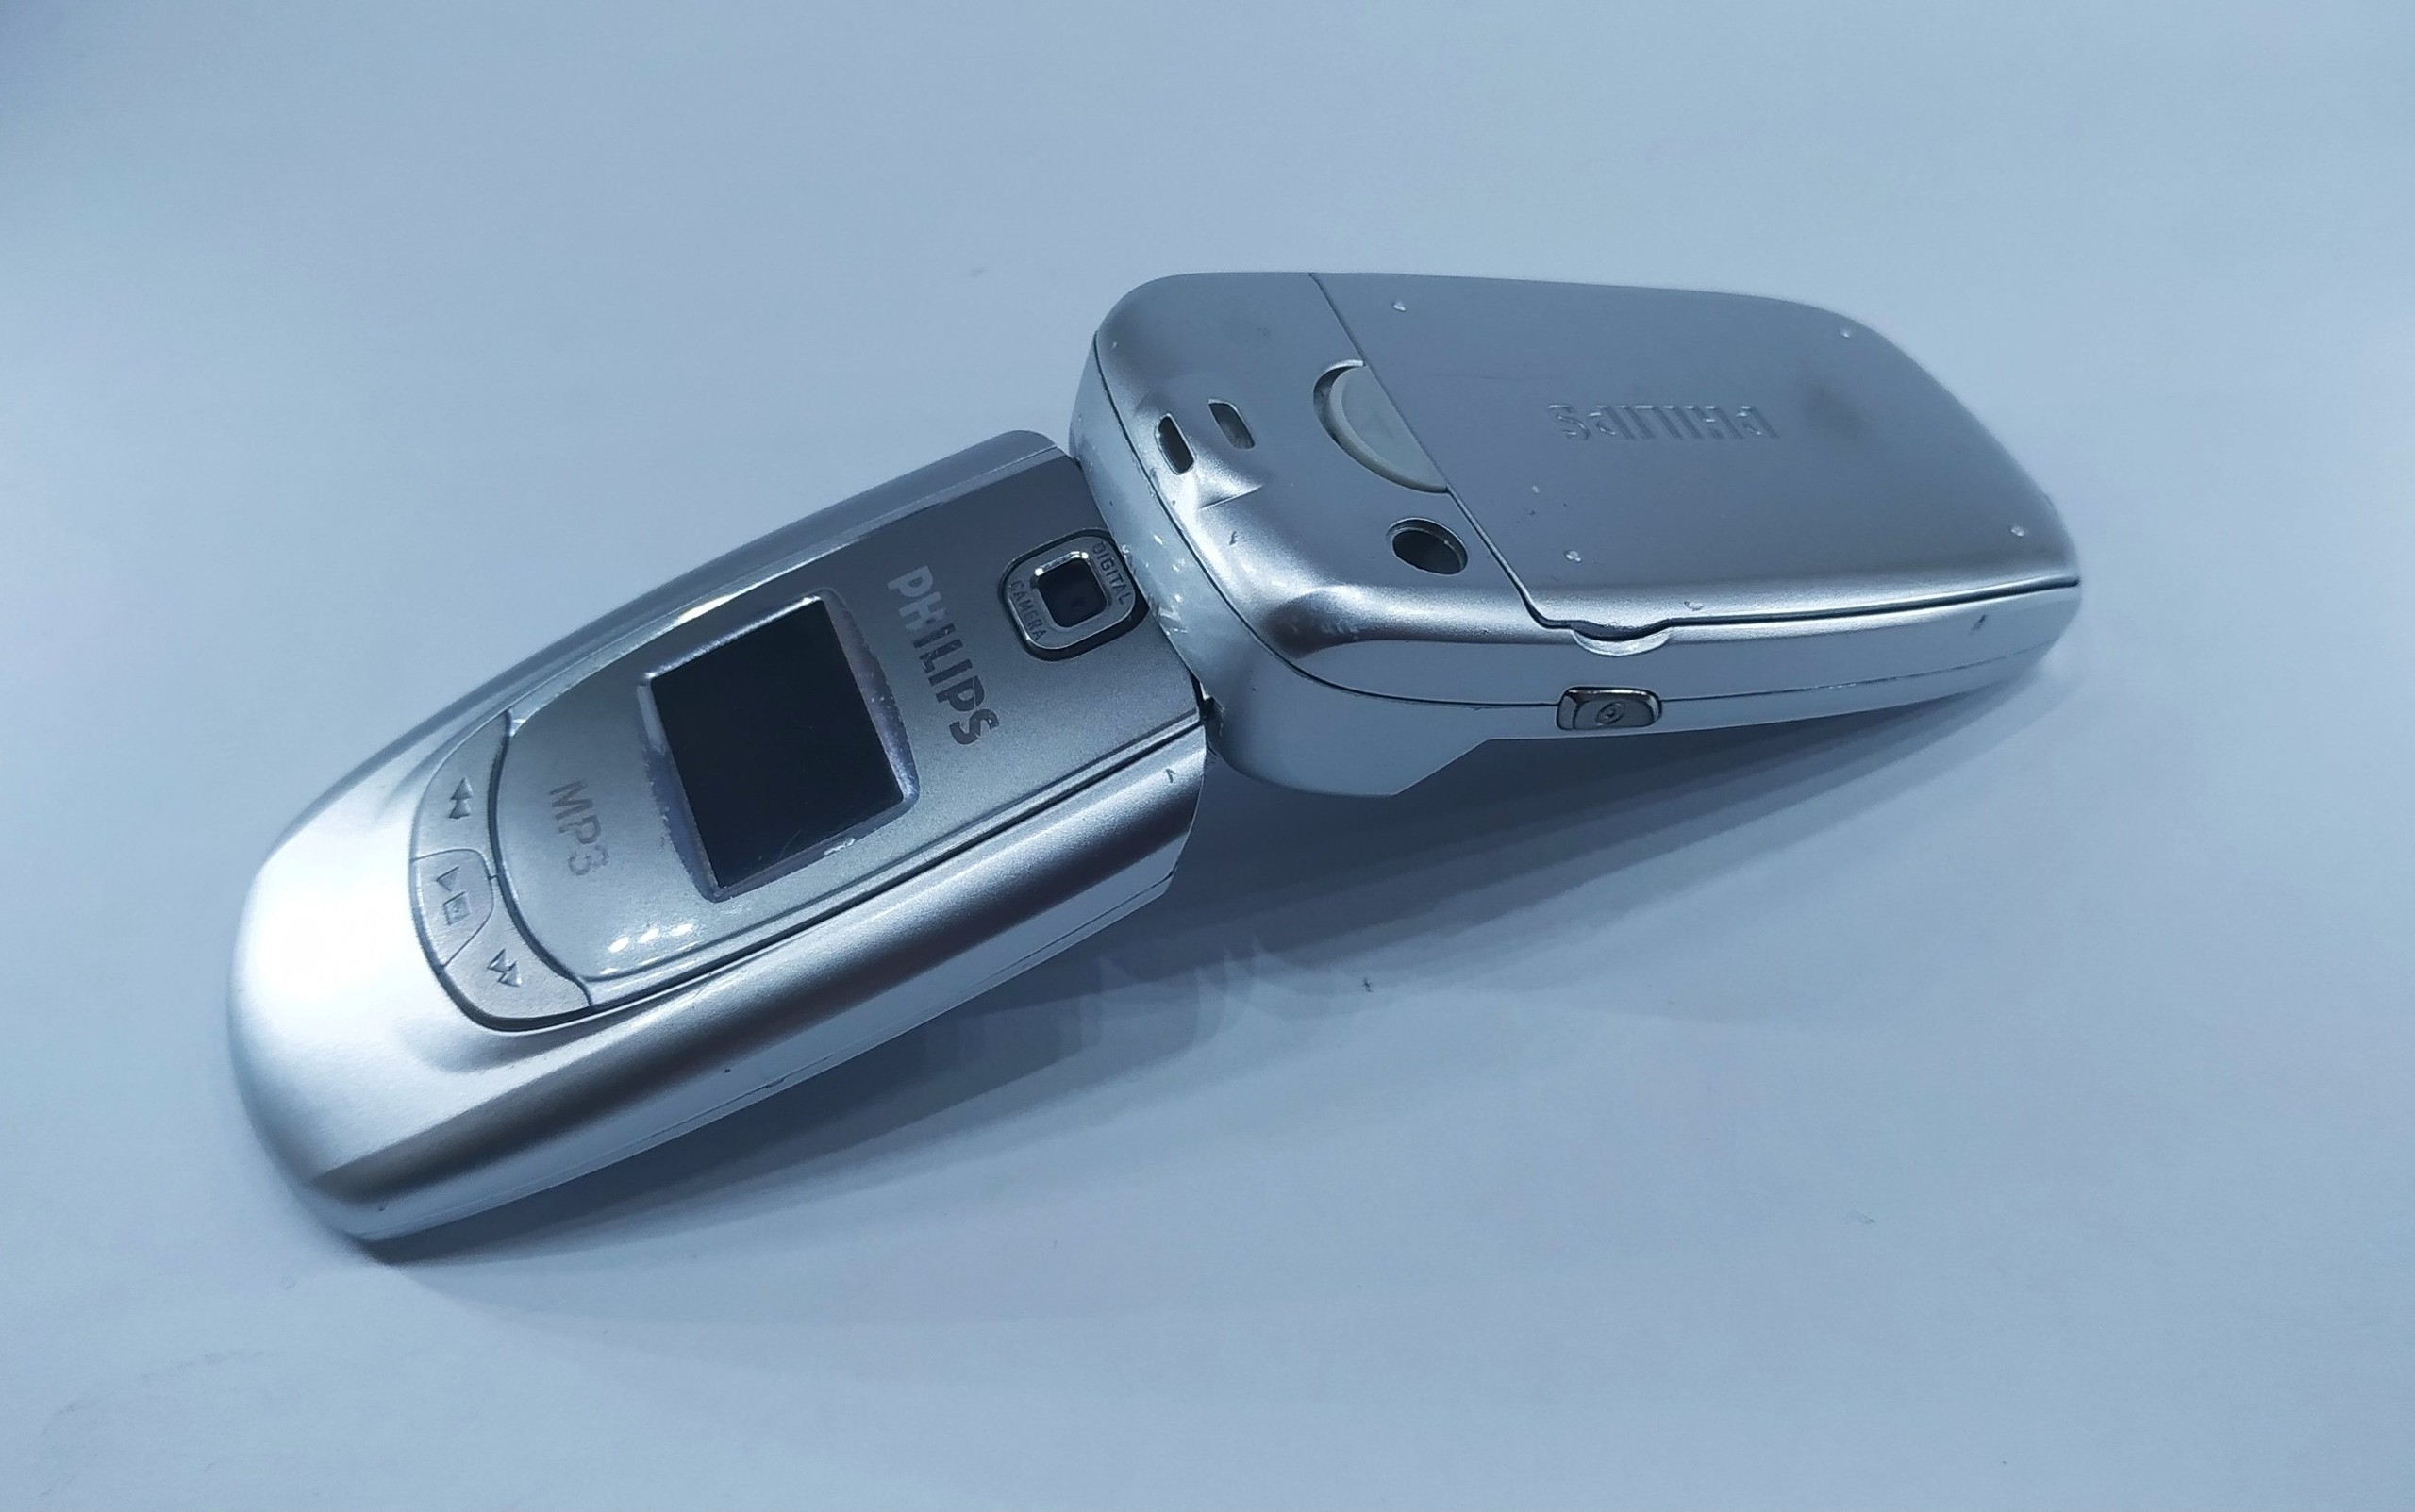 3 adet Telefon 55 TL Klasikler, Samsung-Nokia-Philips